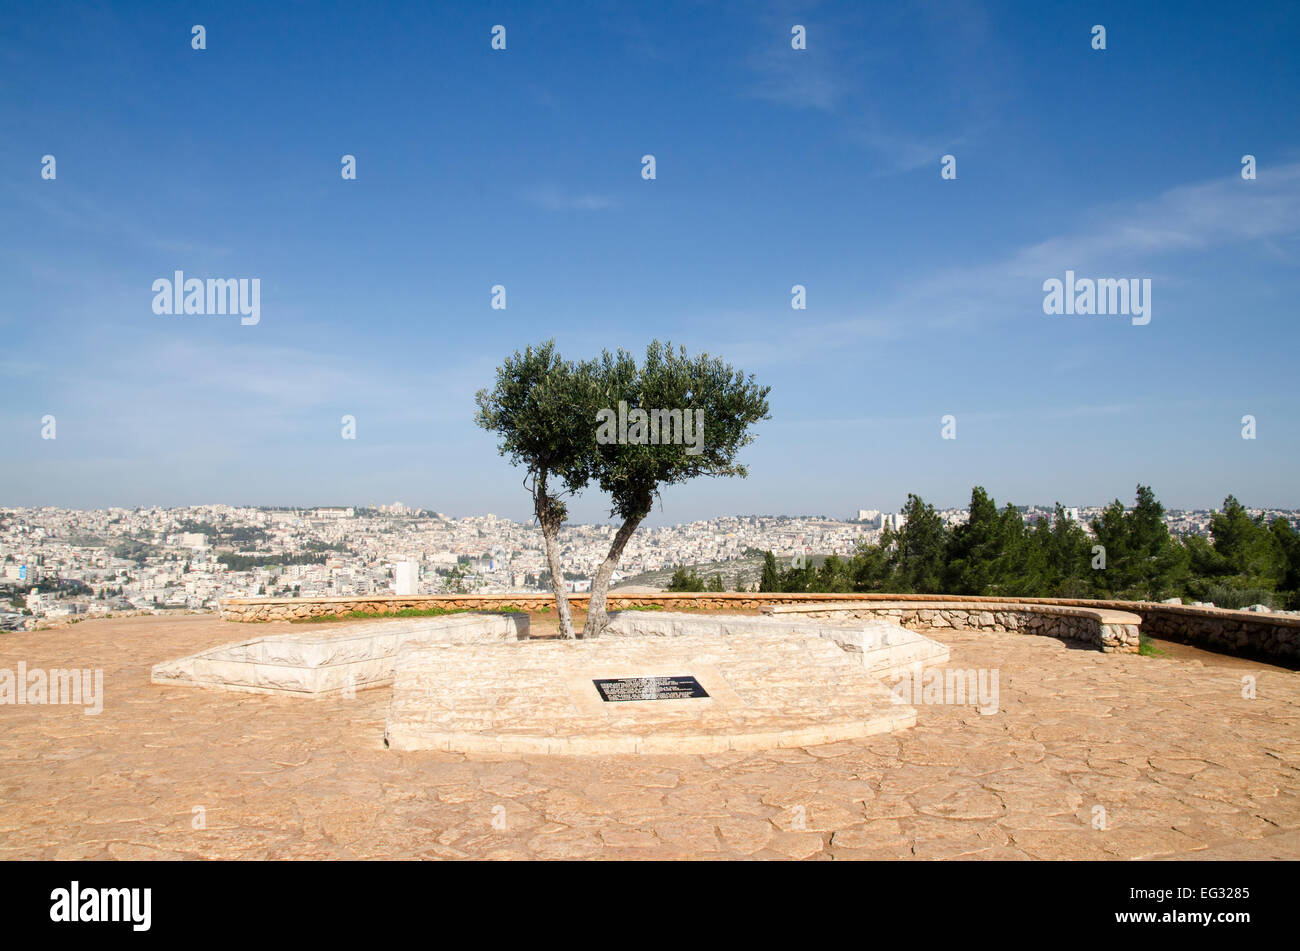 Israel, Lower Galilee, Mount Precipice overlooking Nazareth Stock Photo